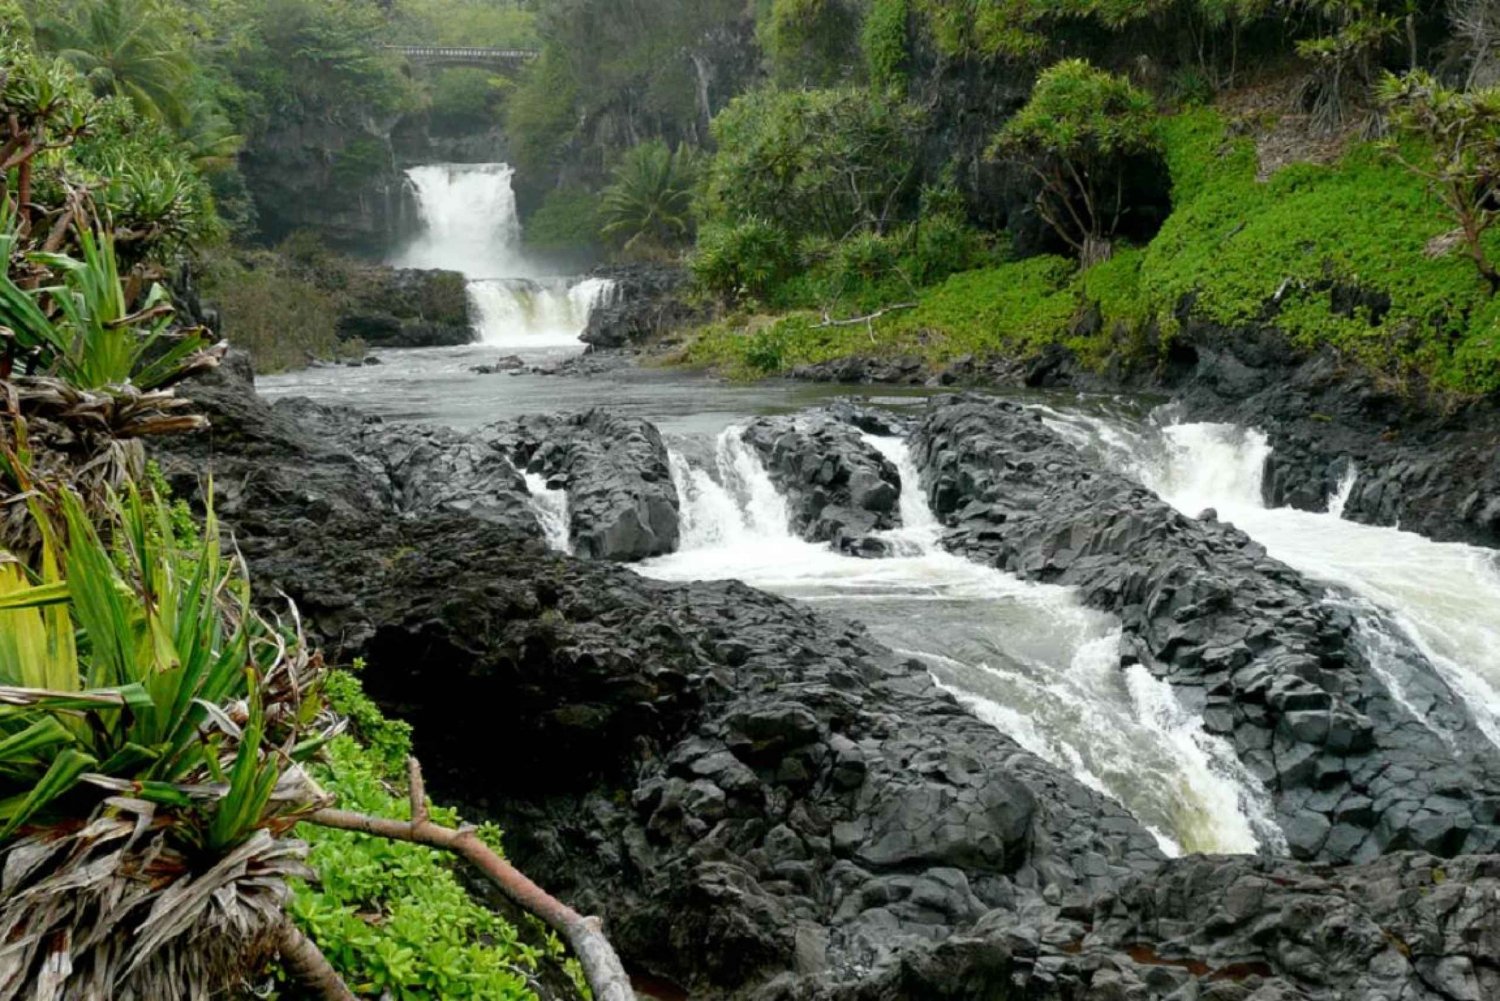 Maui: Vandretur på Maui: Heldagsvandretur med frokost